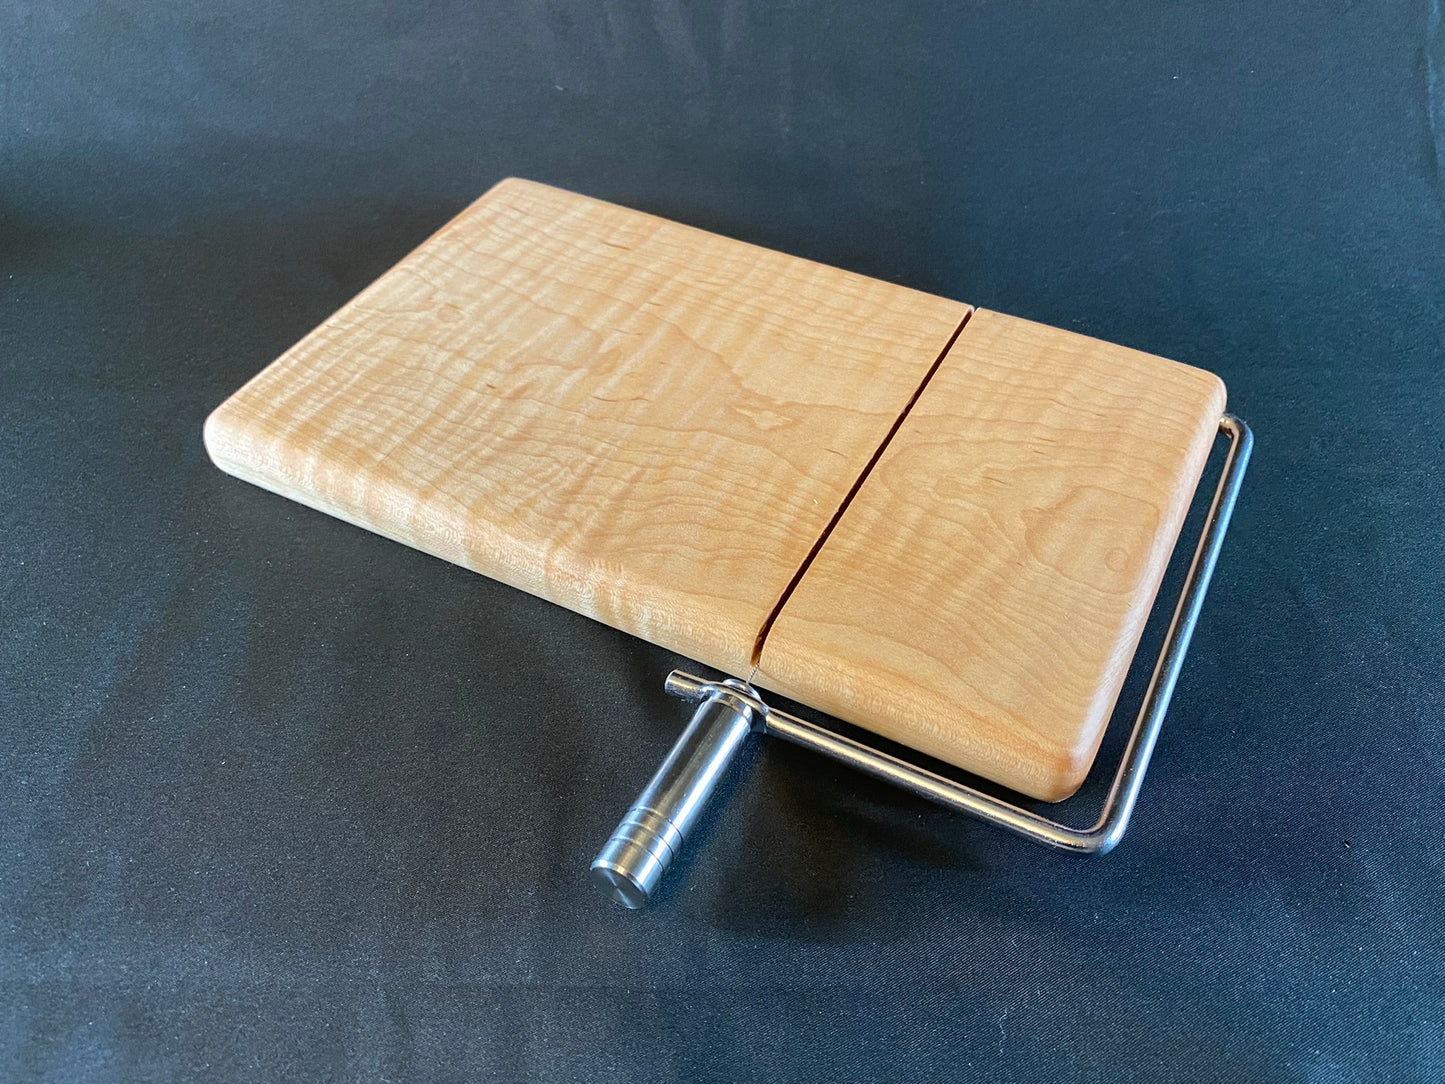 Super Curly Maple Cheese Board Slicer Edge Grain Cutting Board